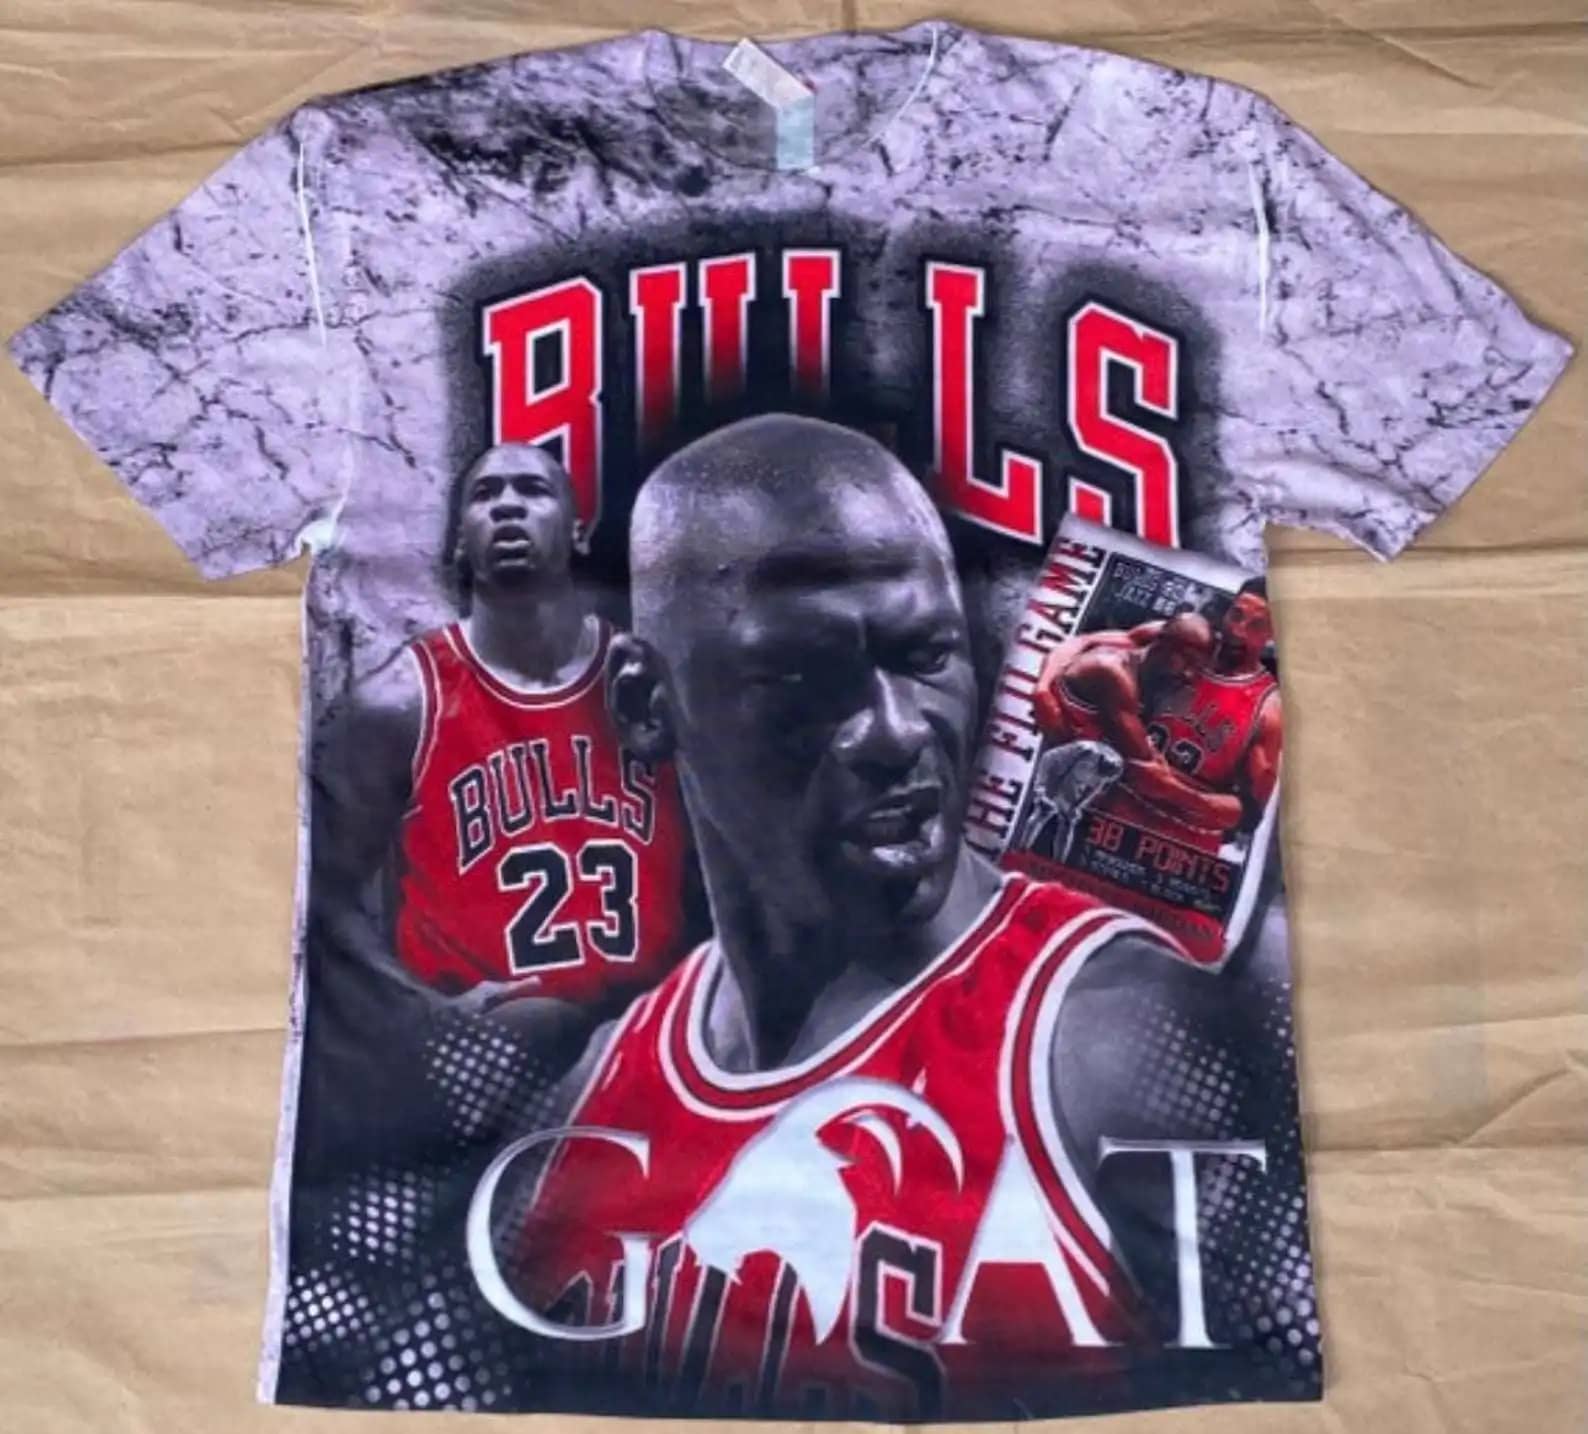 Michael Jordan 23 Chicago Bulls Fans 3D All Over Print 3D TShirt